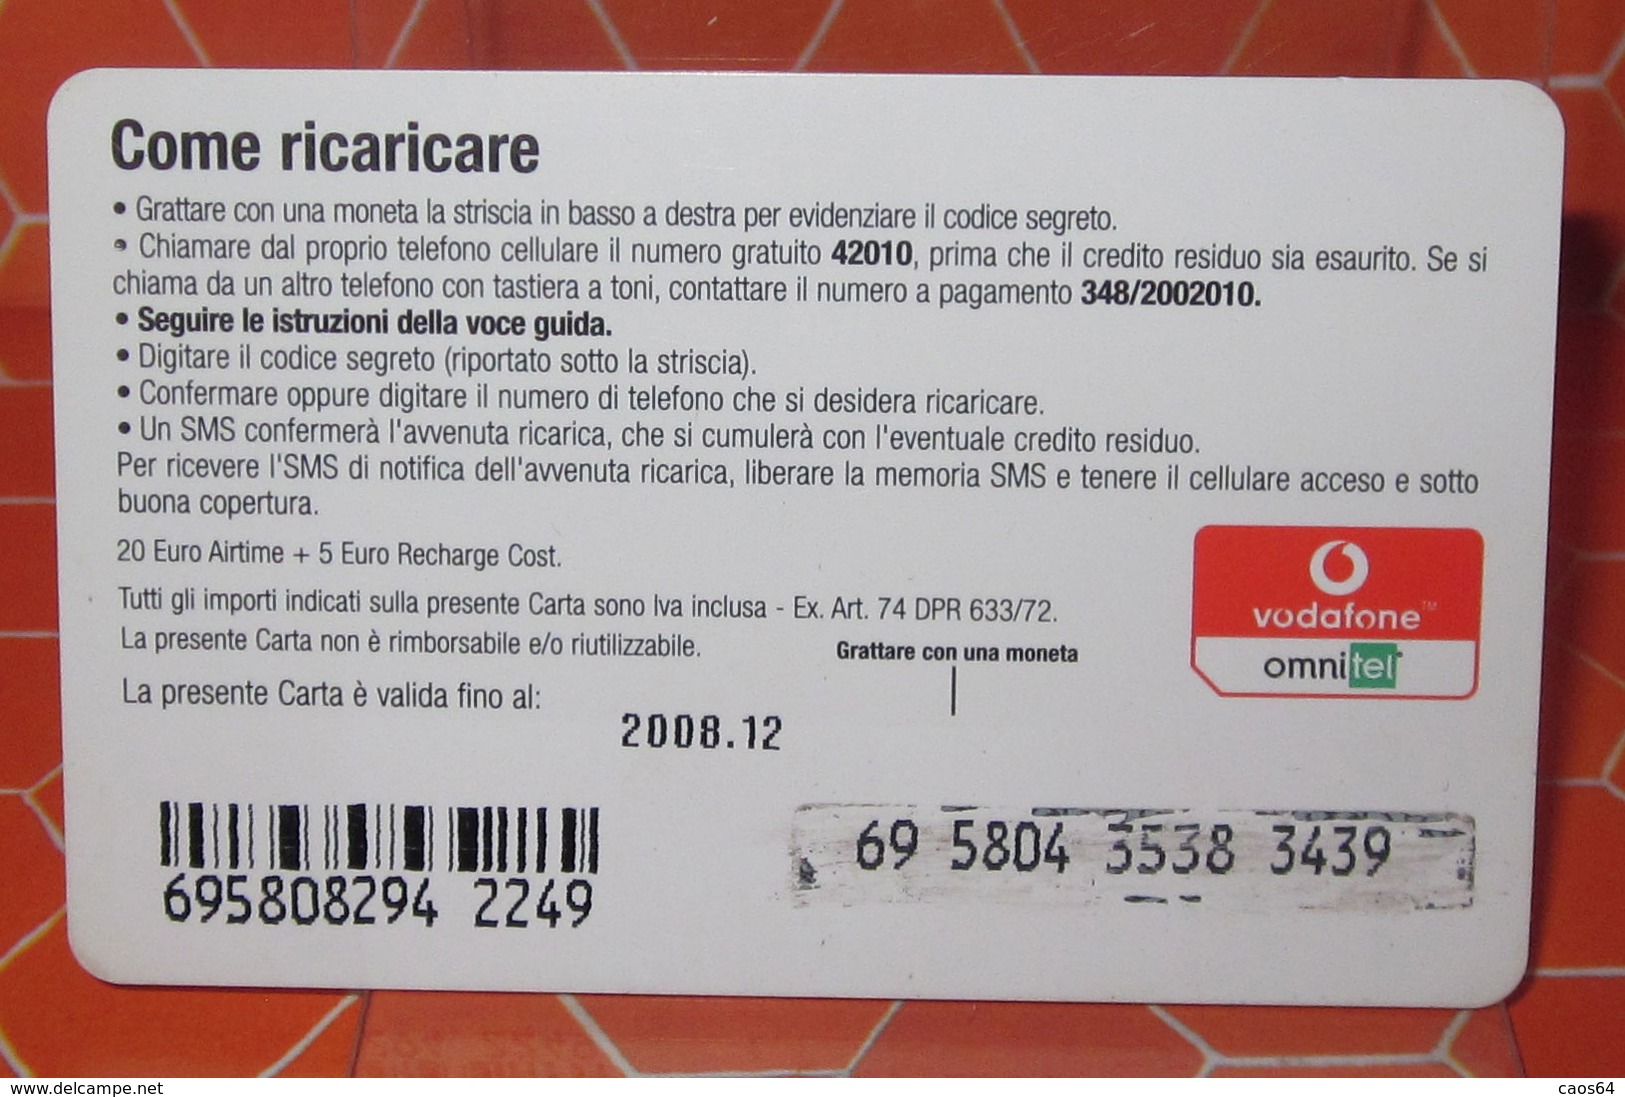 VODAFONE OMNITEL CARICO SOSPESO - [2] Sim Cards, Prepaid & Refills